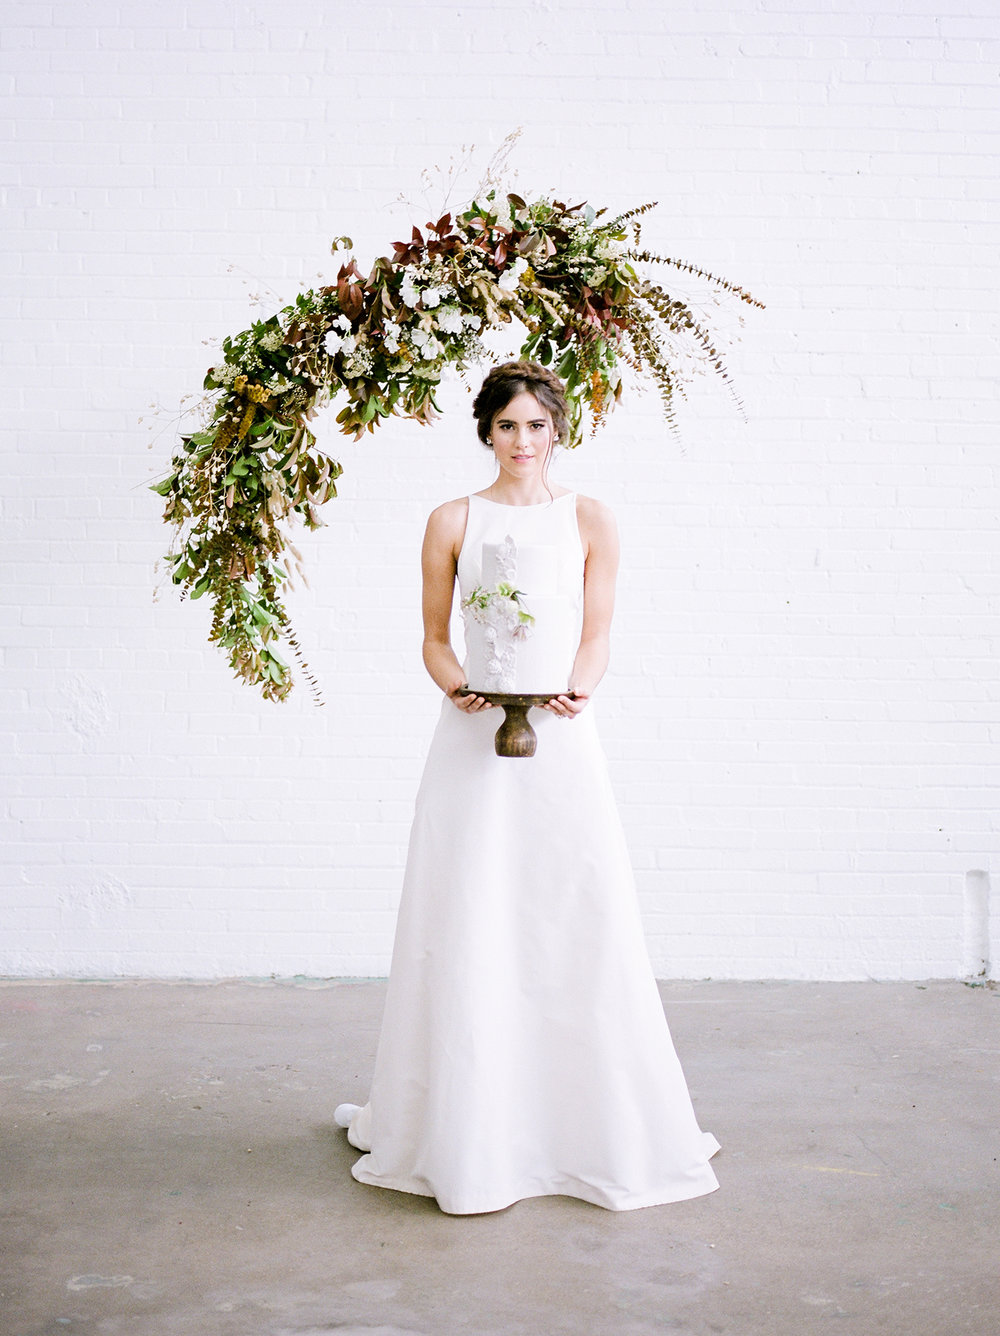 Wedding Floral Design Dallas - Olive Grove Design - Mimimalist Fall Wedding - 00091.jpg